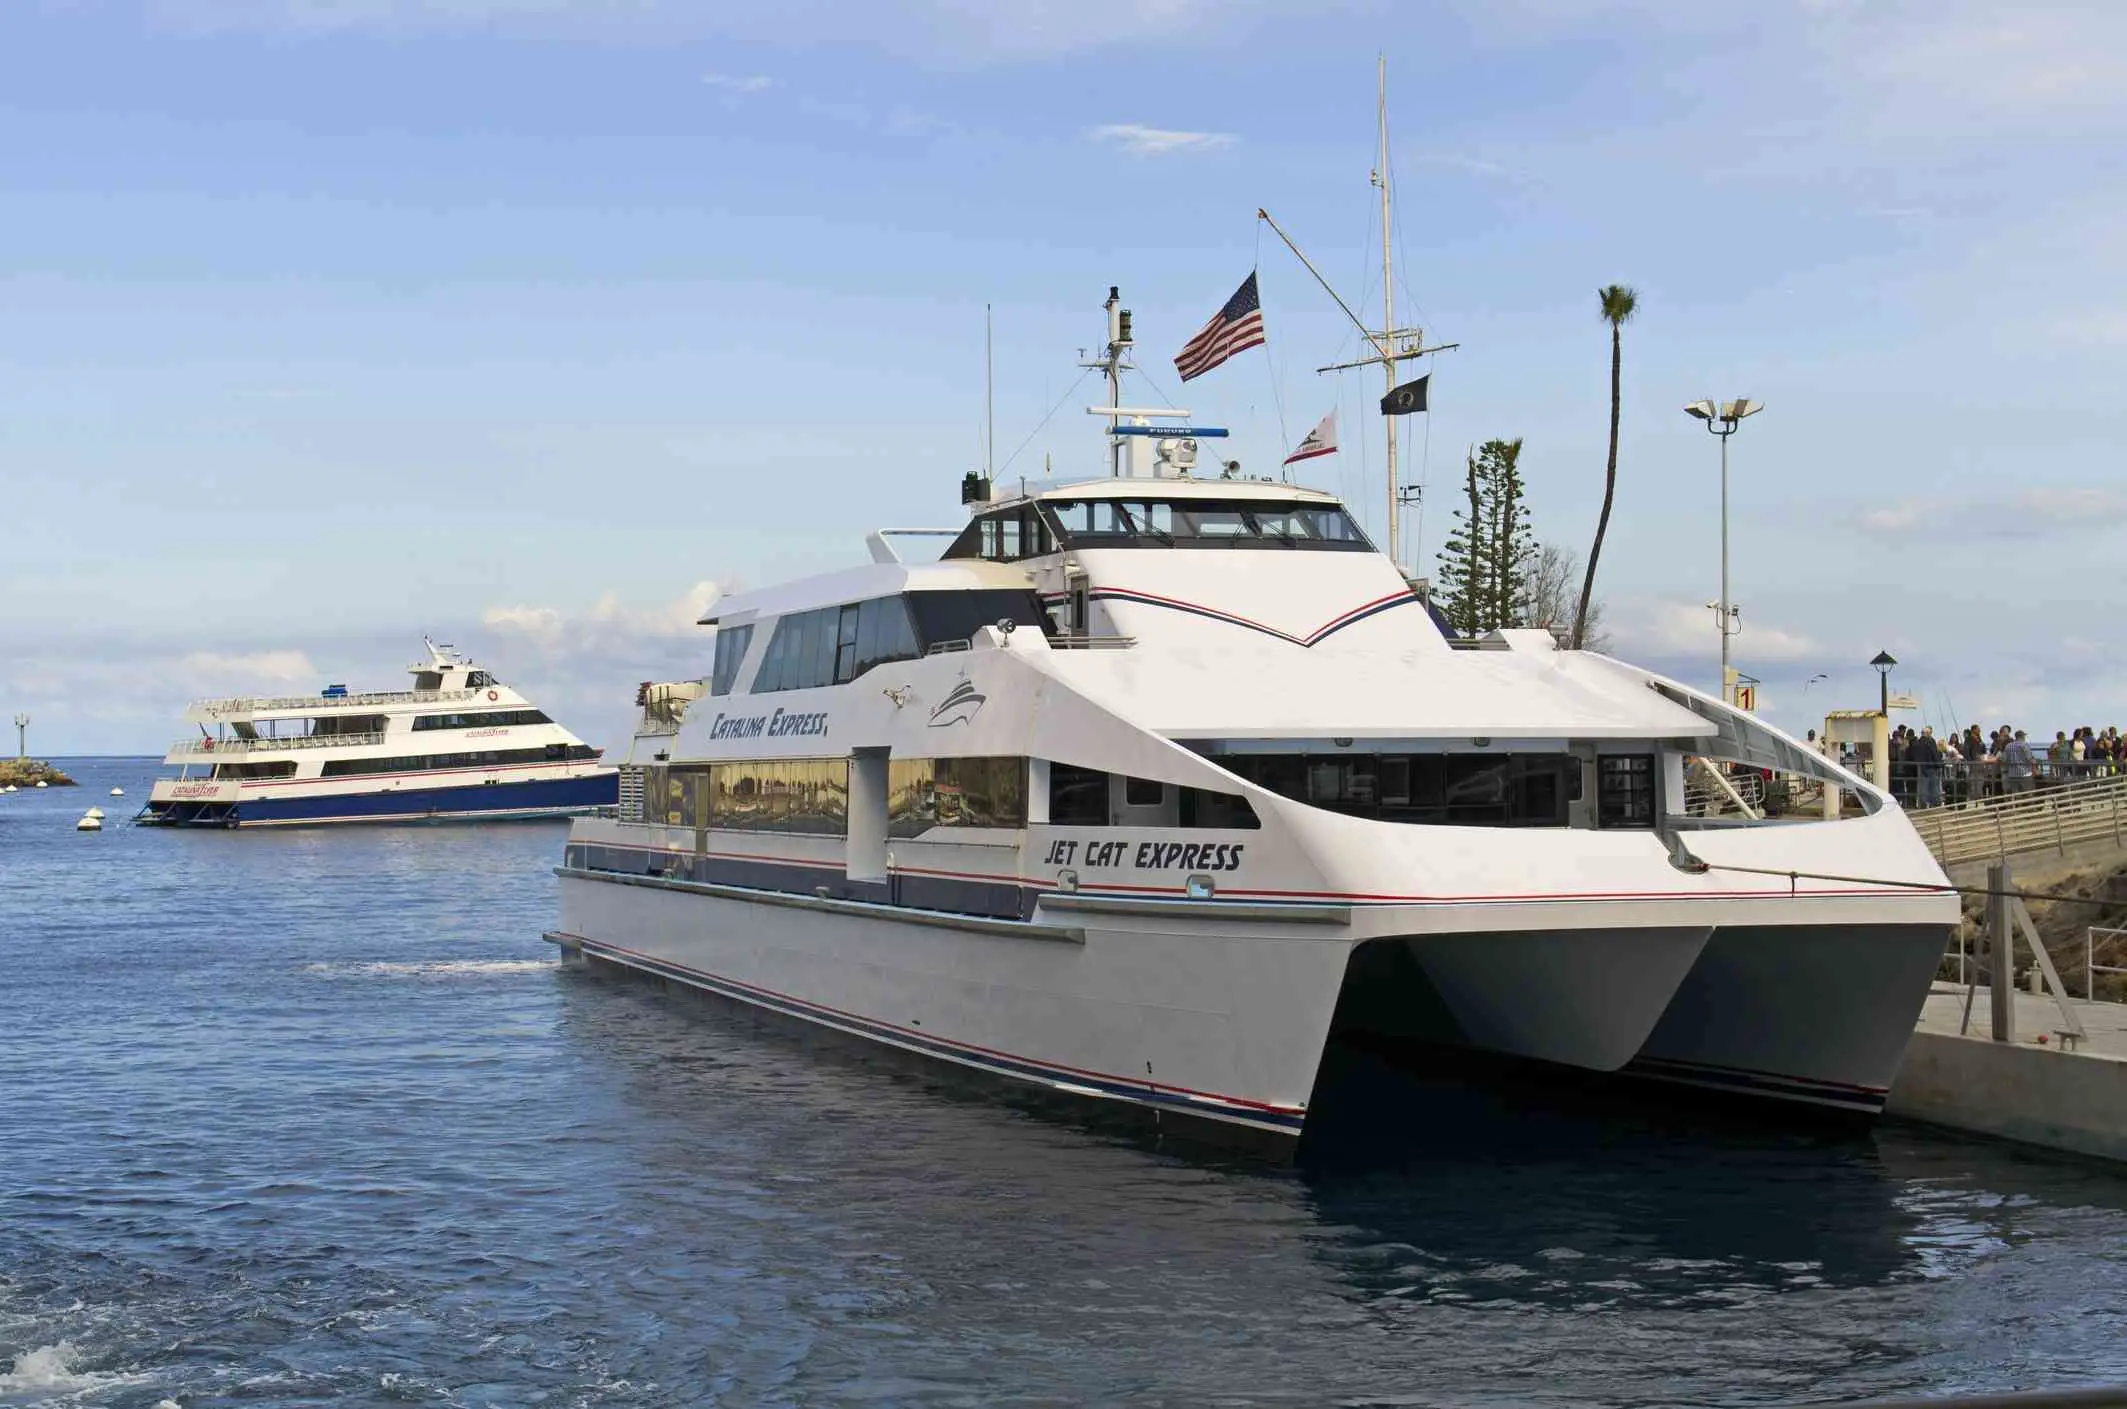 Take the Ferry to Catalina Island